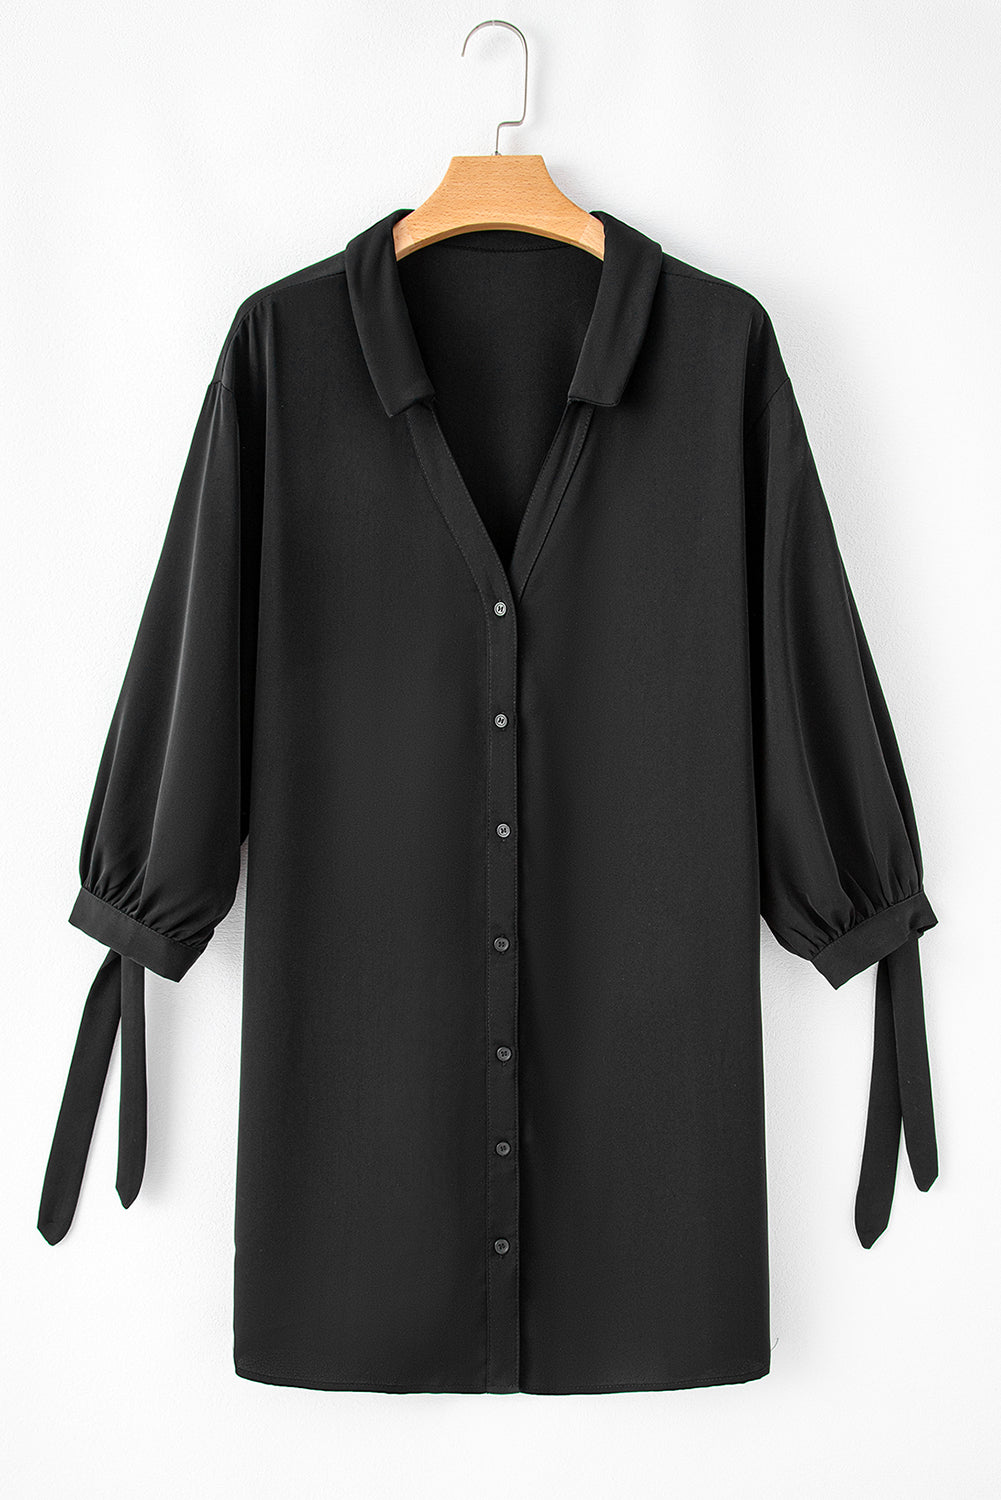 Black Plus Size Tie Cuffs V Neck Shirt Dress - SELFTRITSS